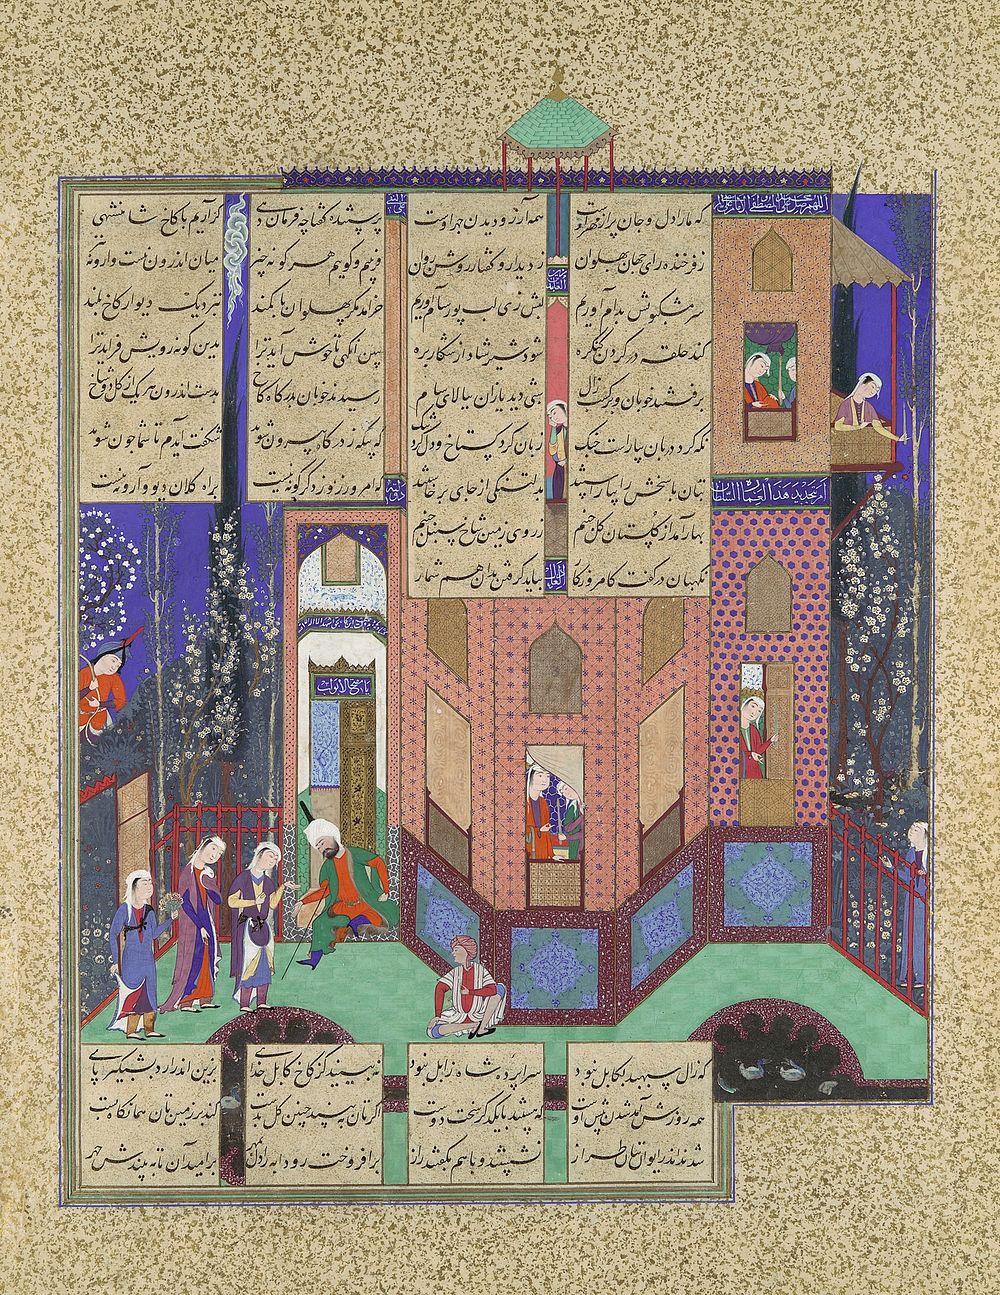 Rudaba's Maids Return to the Palace", Folio 71v from the Shahnama (Book of Kings) of Shah Tahmasp, Abu'l Qasim Firdausi…